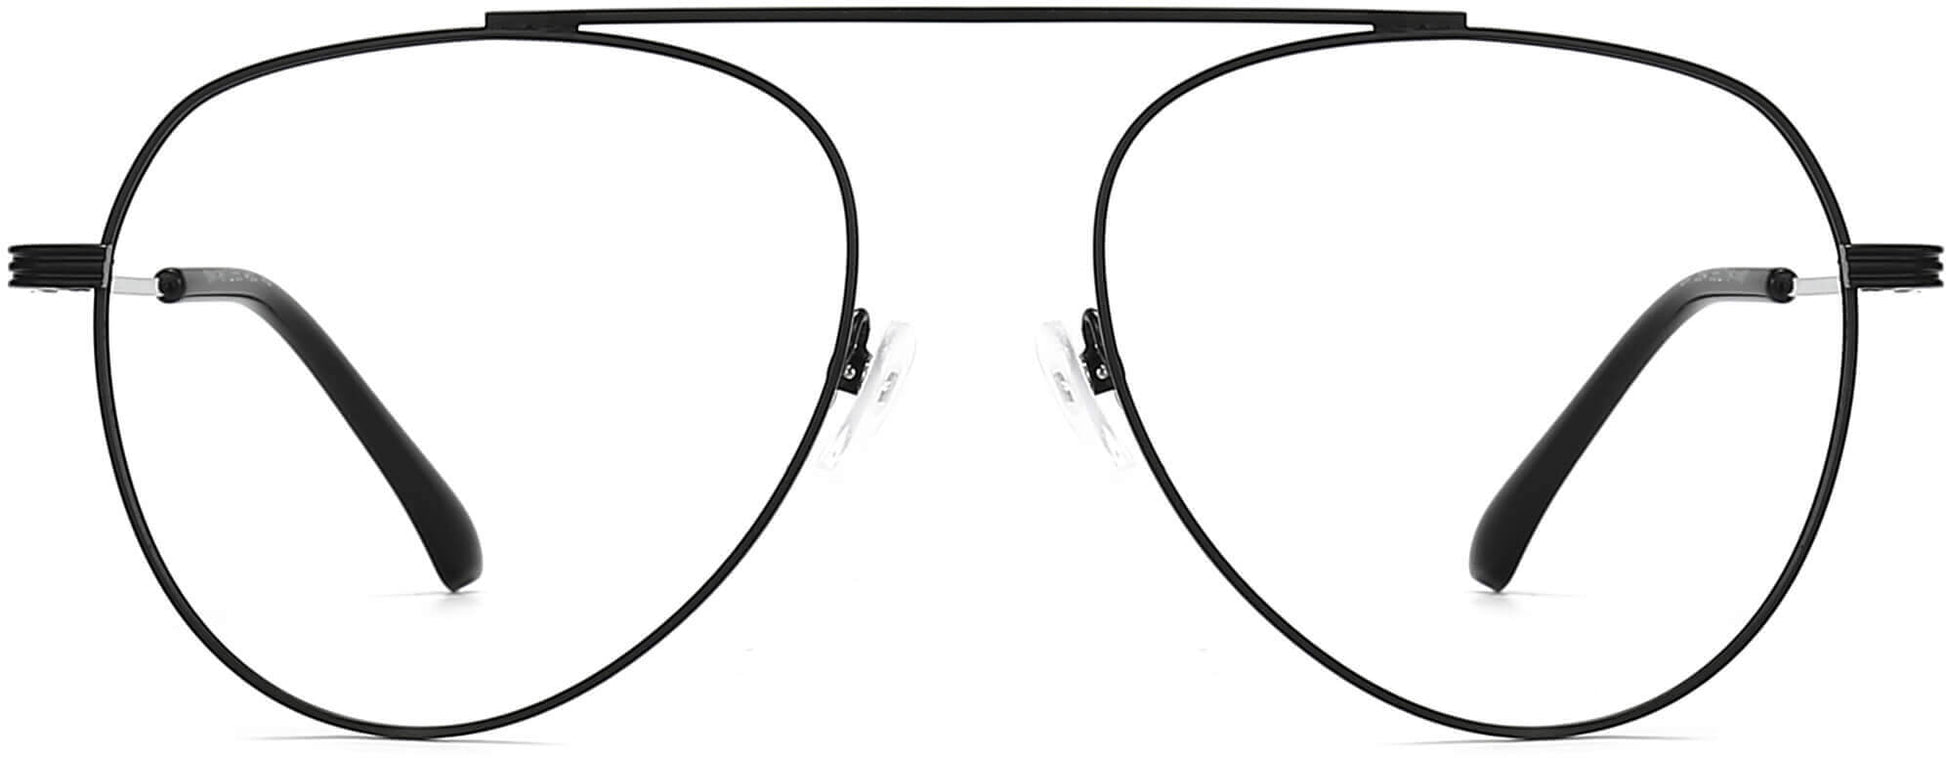 Maverick Aviator Black Eyeglasses from ANRRI, front view